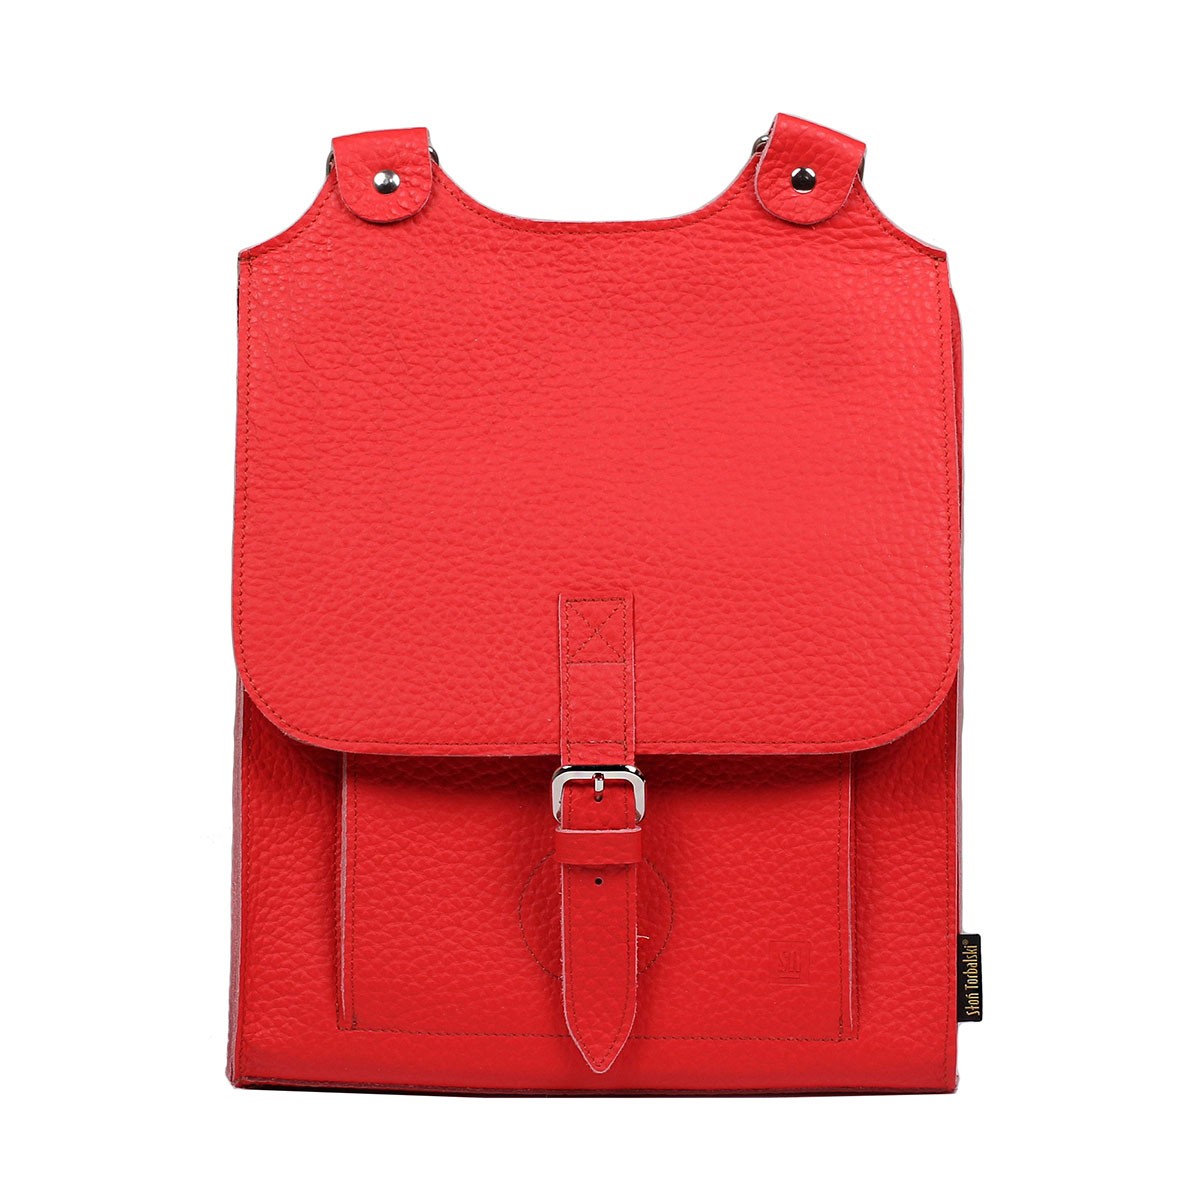 czerwony-plecak-skorzany-vintage-Bookpack-00-09-0909-E15-961510-min.jpg